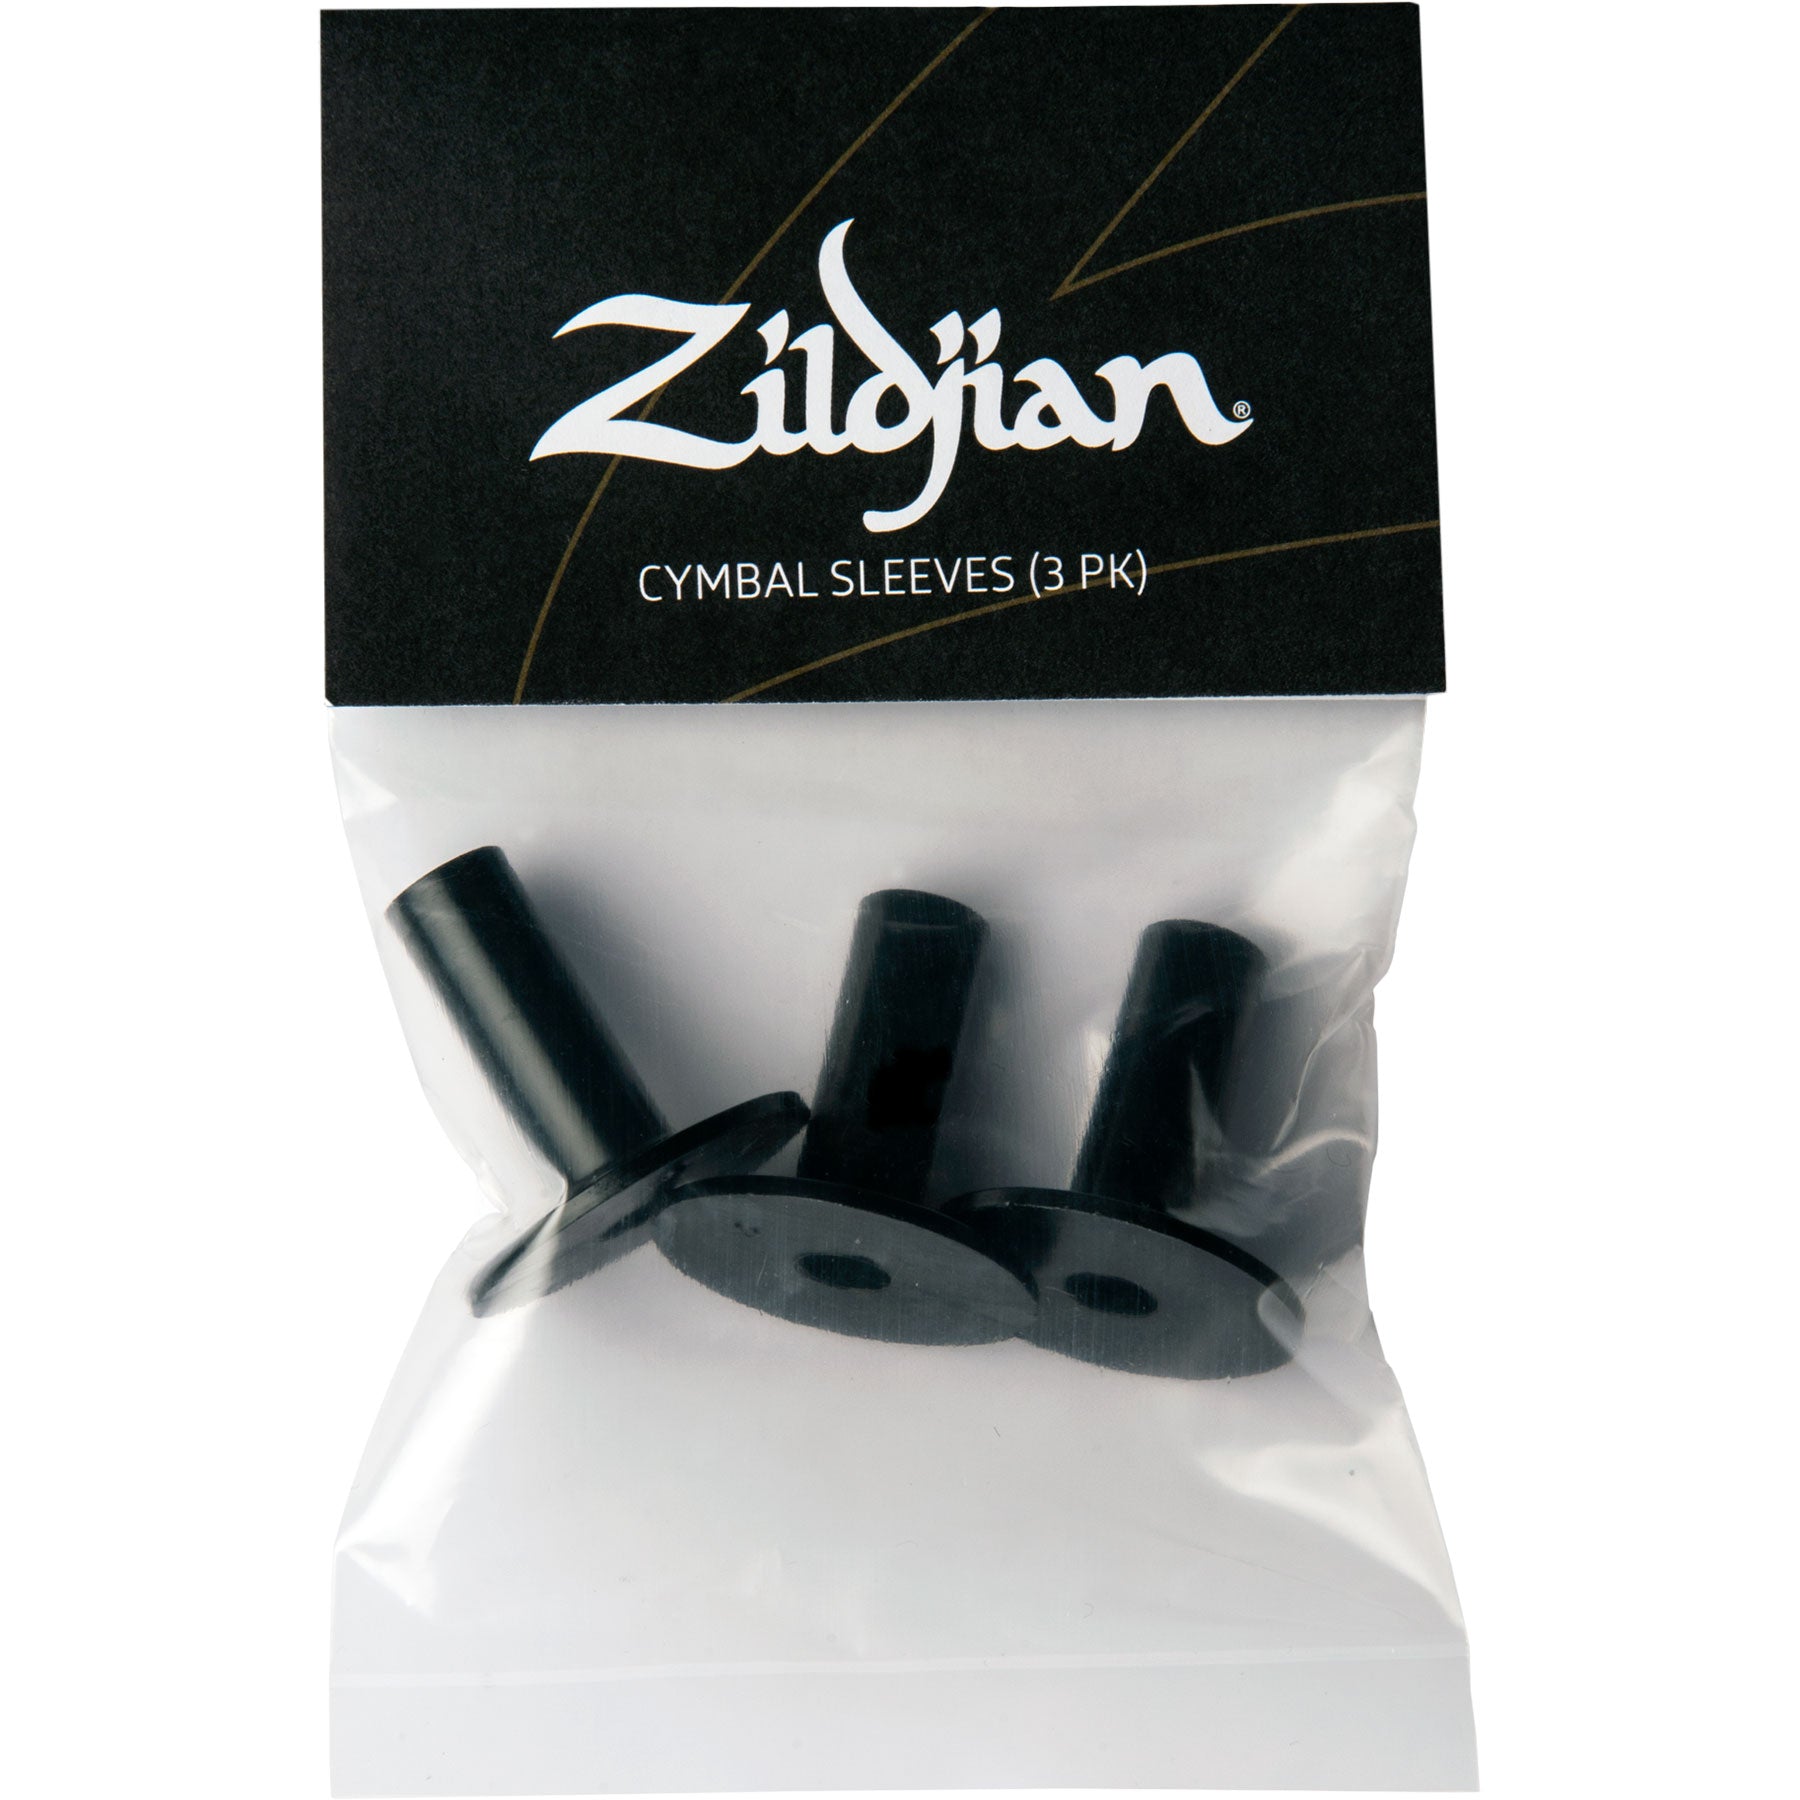 Zildjian Cymbal Sleeves 3 Pack